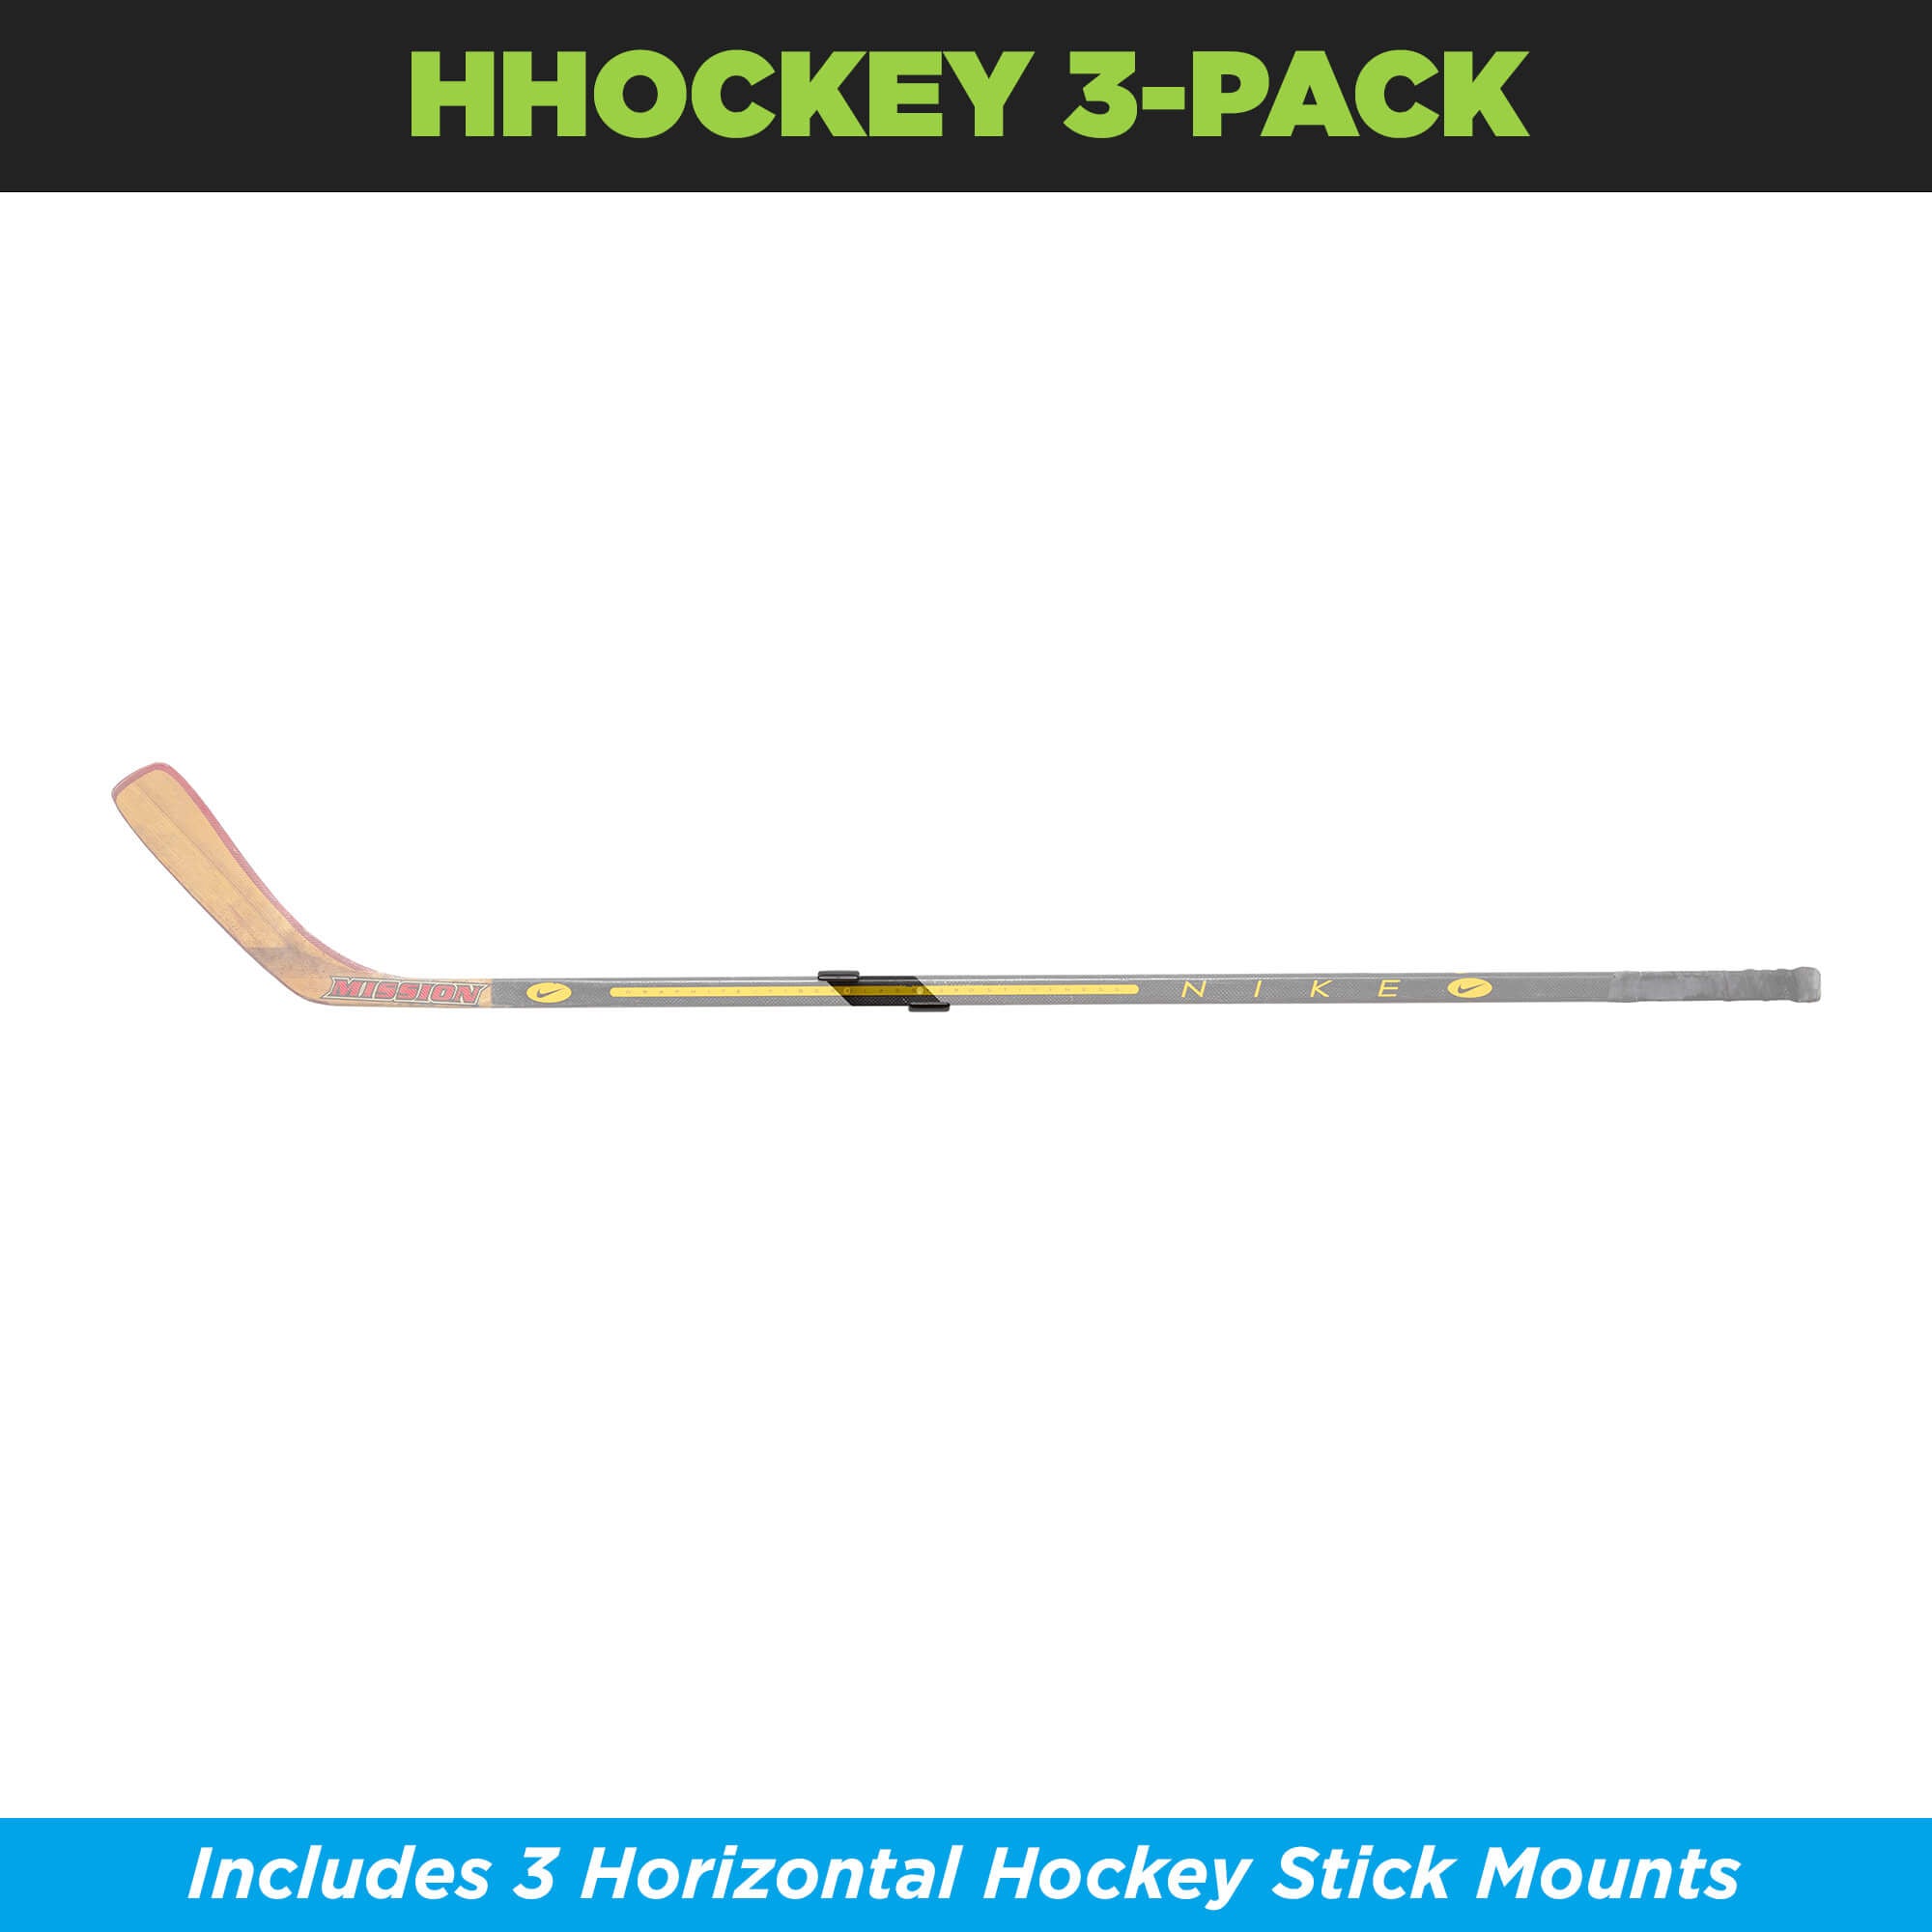 HIDEit Mounts Horizontal Hockey Stick Mount 3-pack.